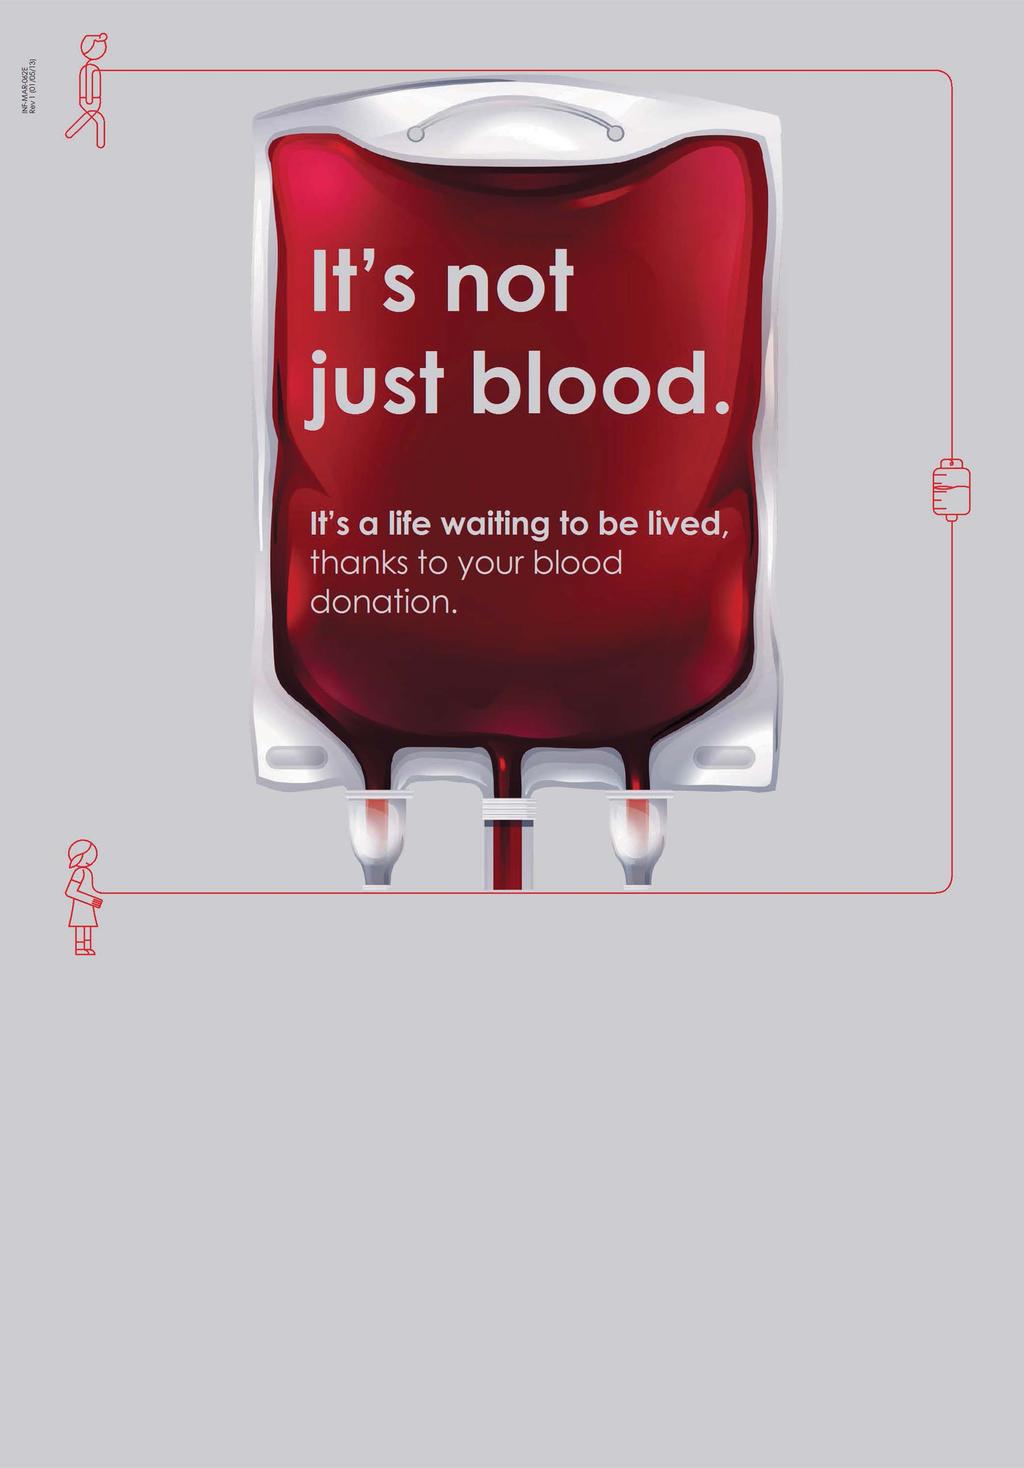 29 June 2018 Standerton Advertiser 5 Please donate blood Standerton Donor Centre Mondays: